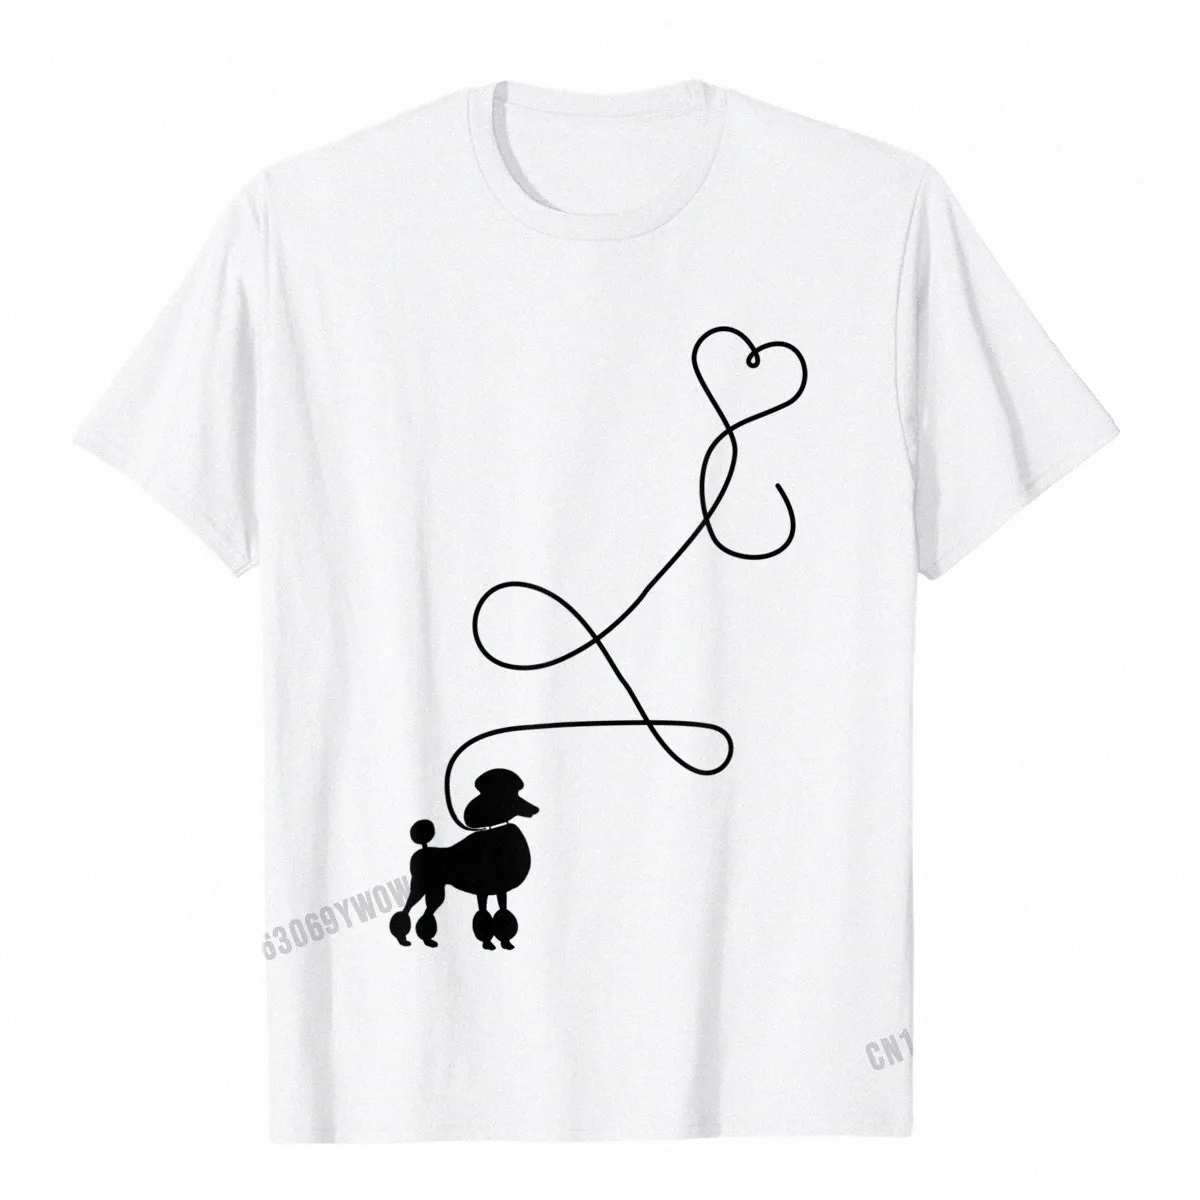 T -shirt z 1950 Sock Hop Costume - Dog Cute Poodle Heart Camisas Men Classic Normal Tops Tees Faddish Cott Men Tshirts A7vd#